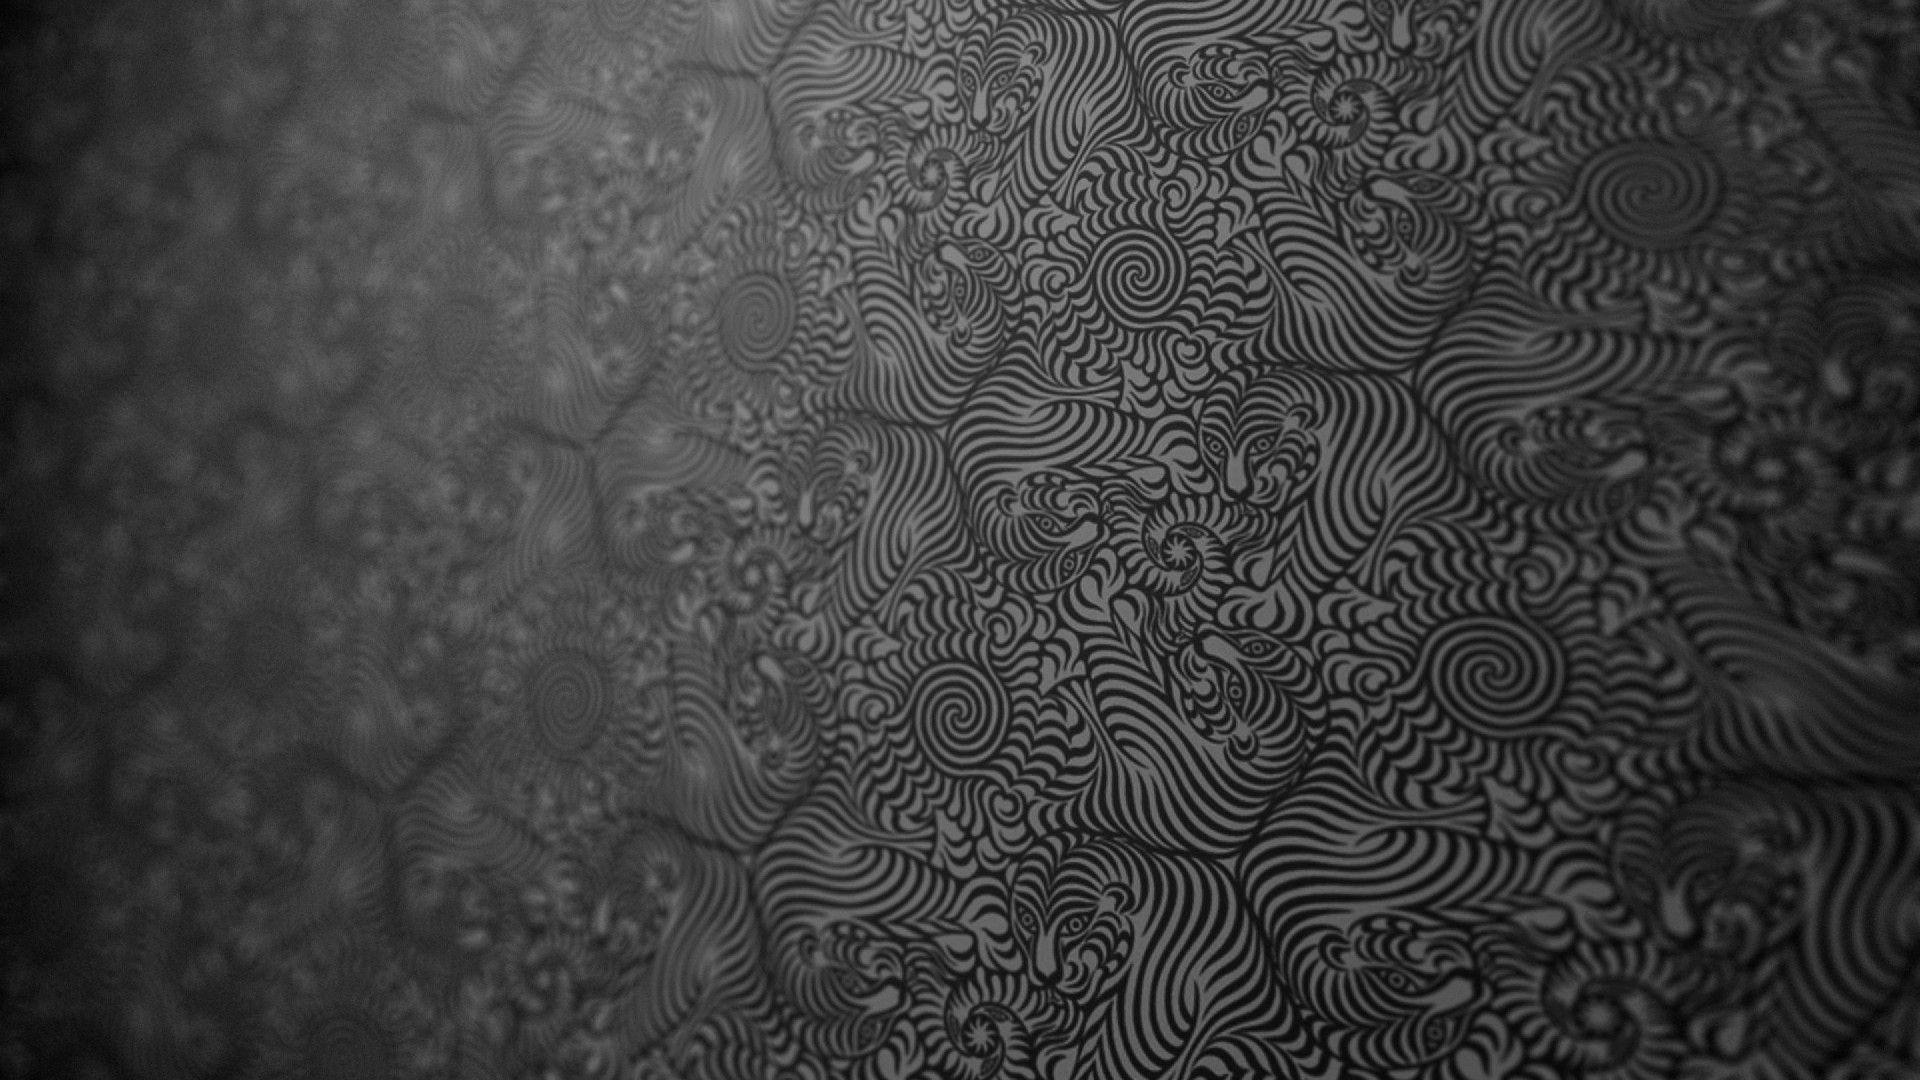 Texture Black White Patterns Tigers HD Widescreen Wallpaper. High